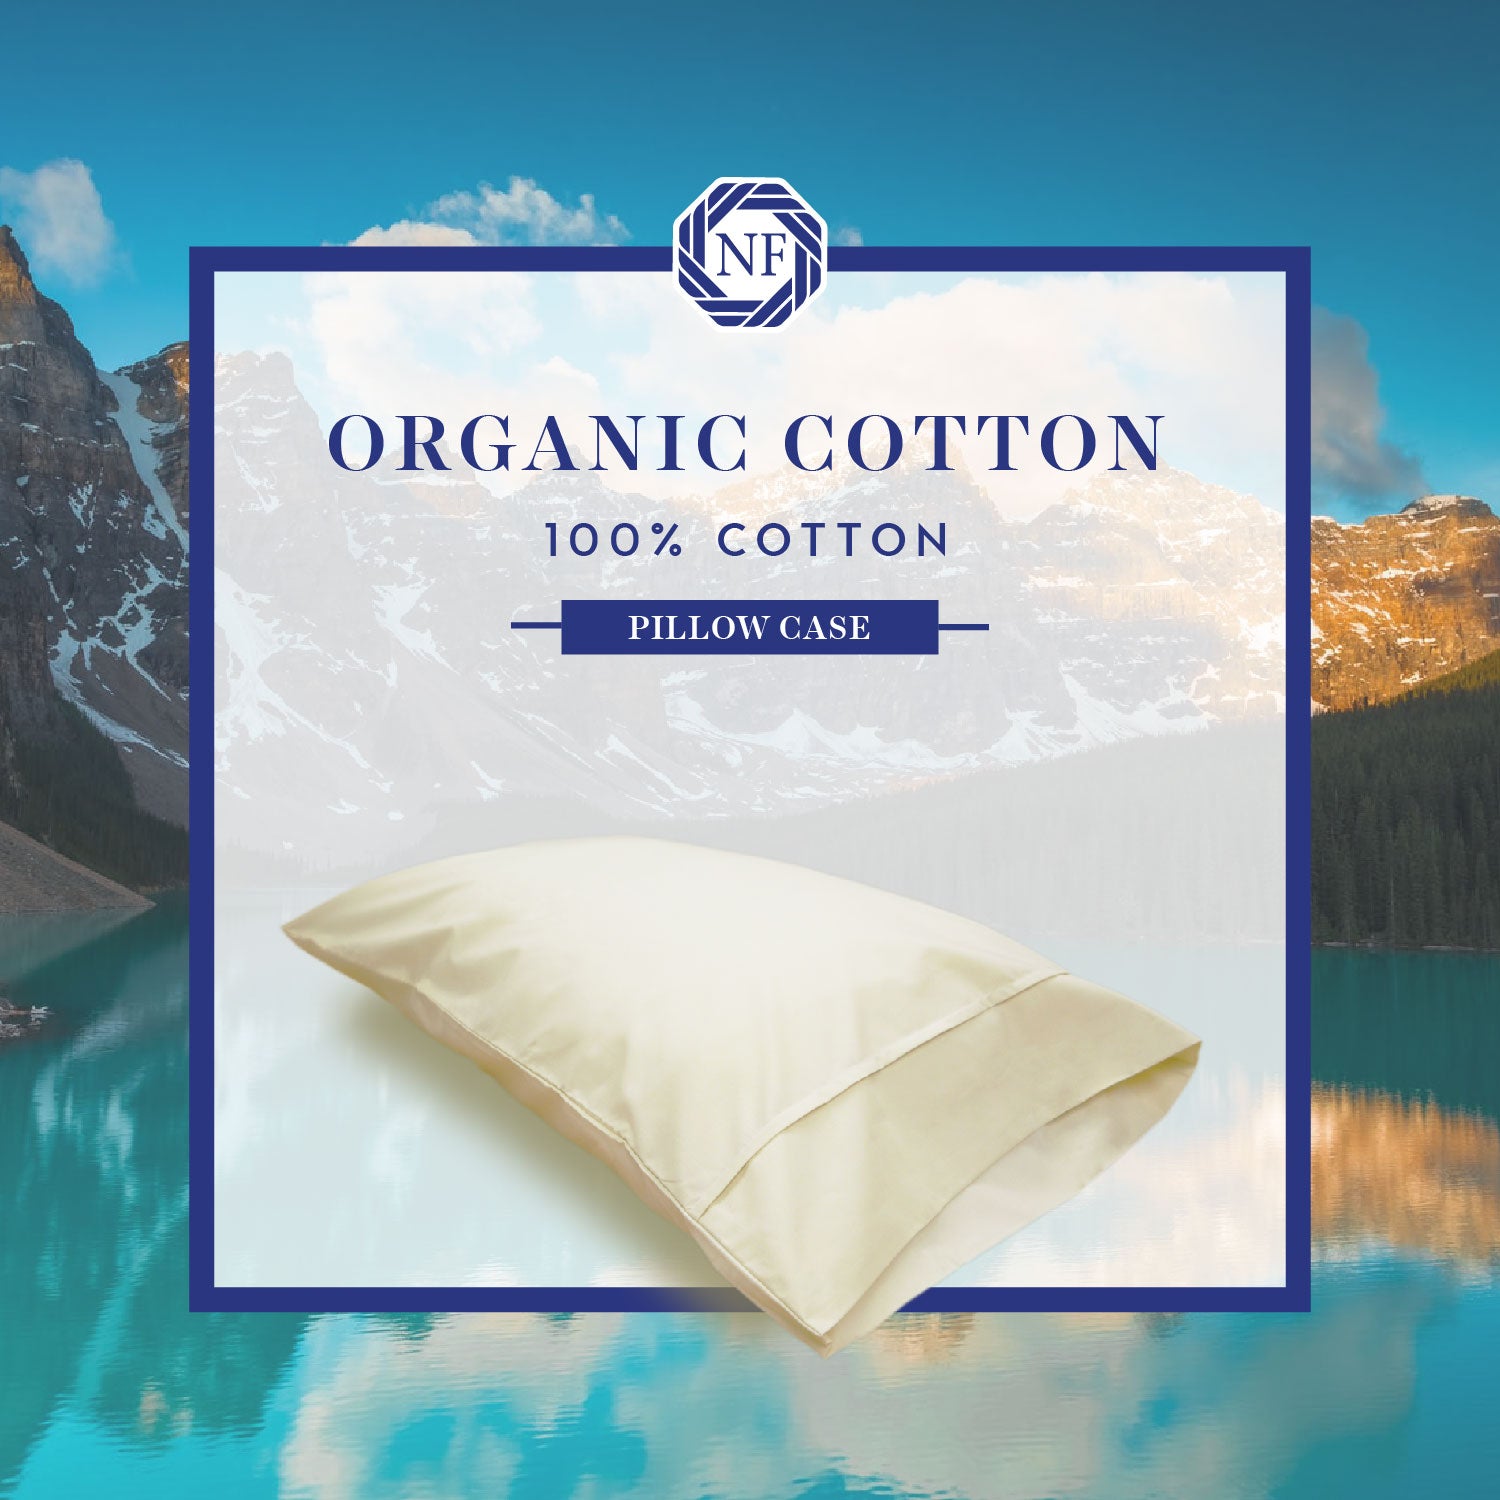 Organic Cotton - 100% Cotton Sheets - Northern Feather Canada eStore